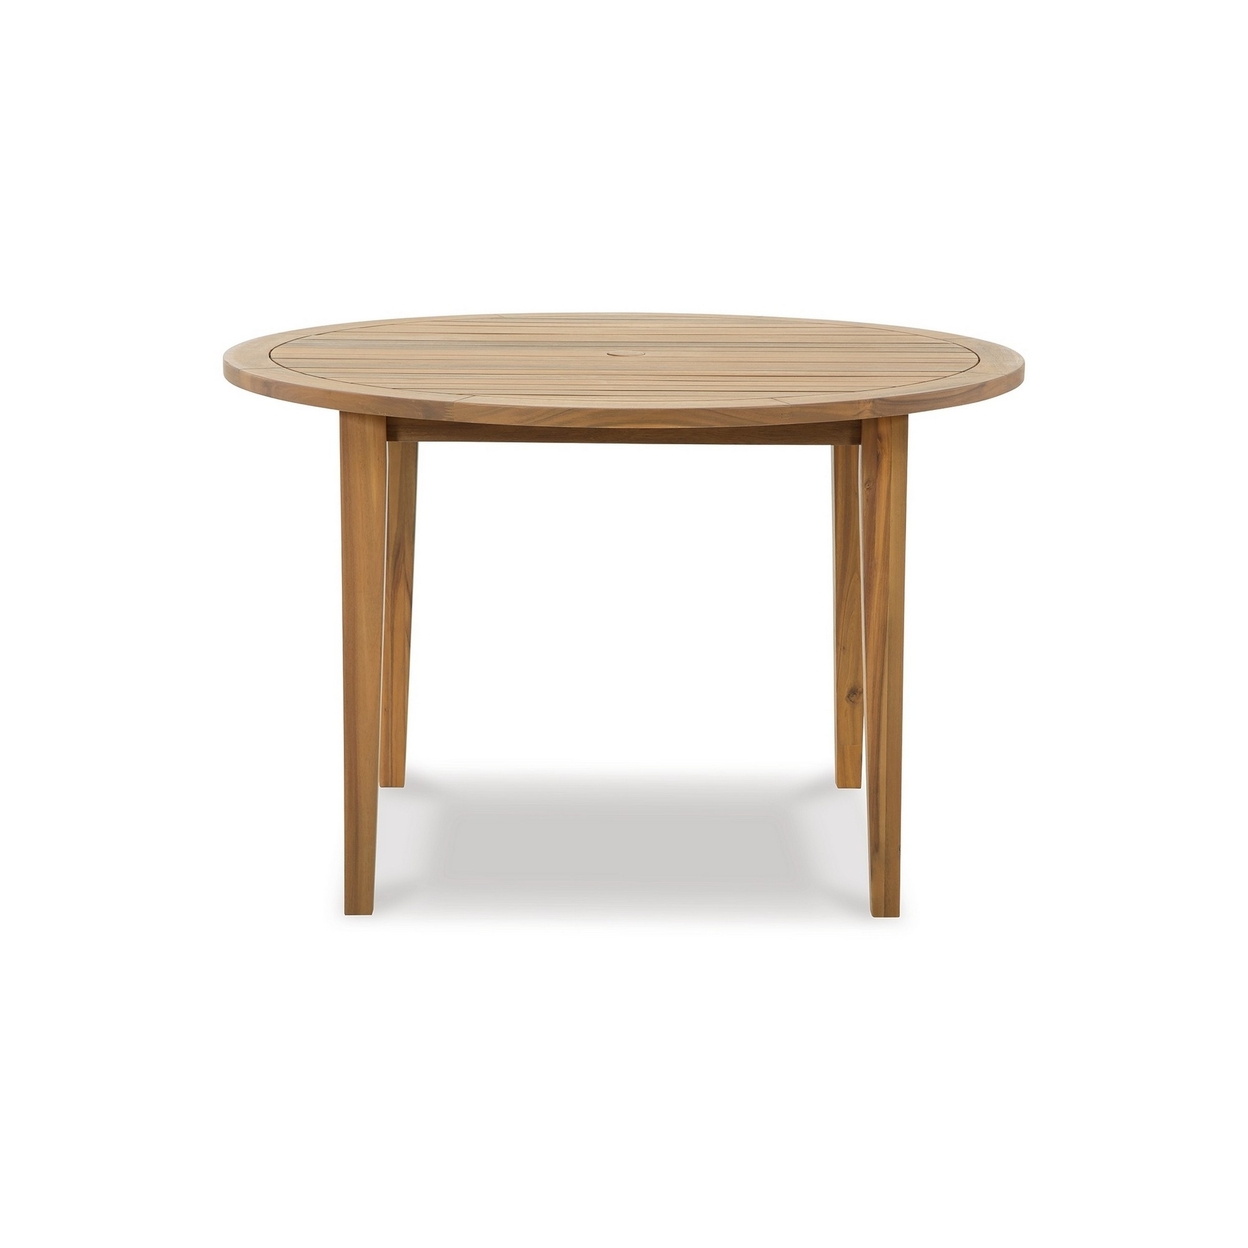 Ita 46 Inch Round Dining Table, Slatted Wood Tabletop, Brown Acacia Frame- Saltoro Sherpi